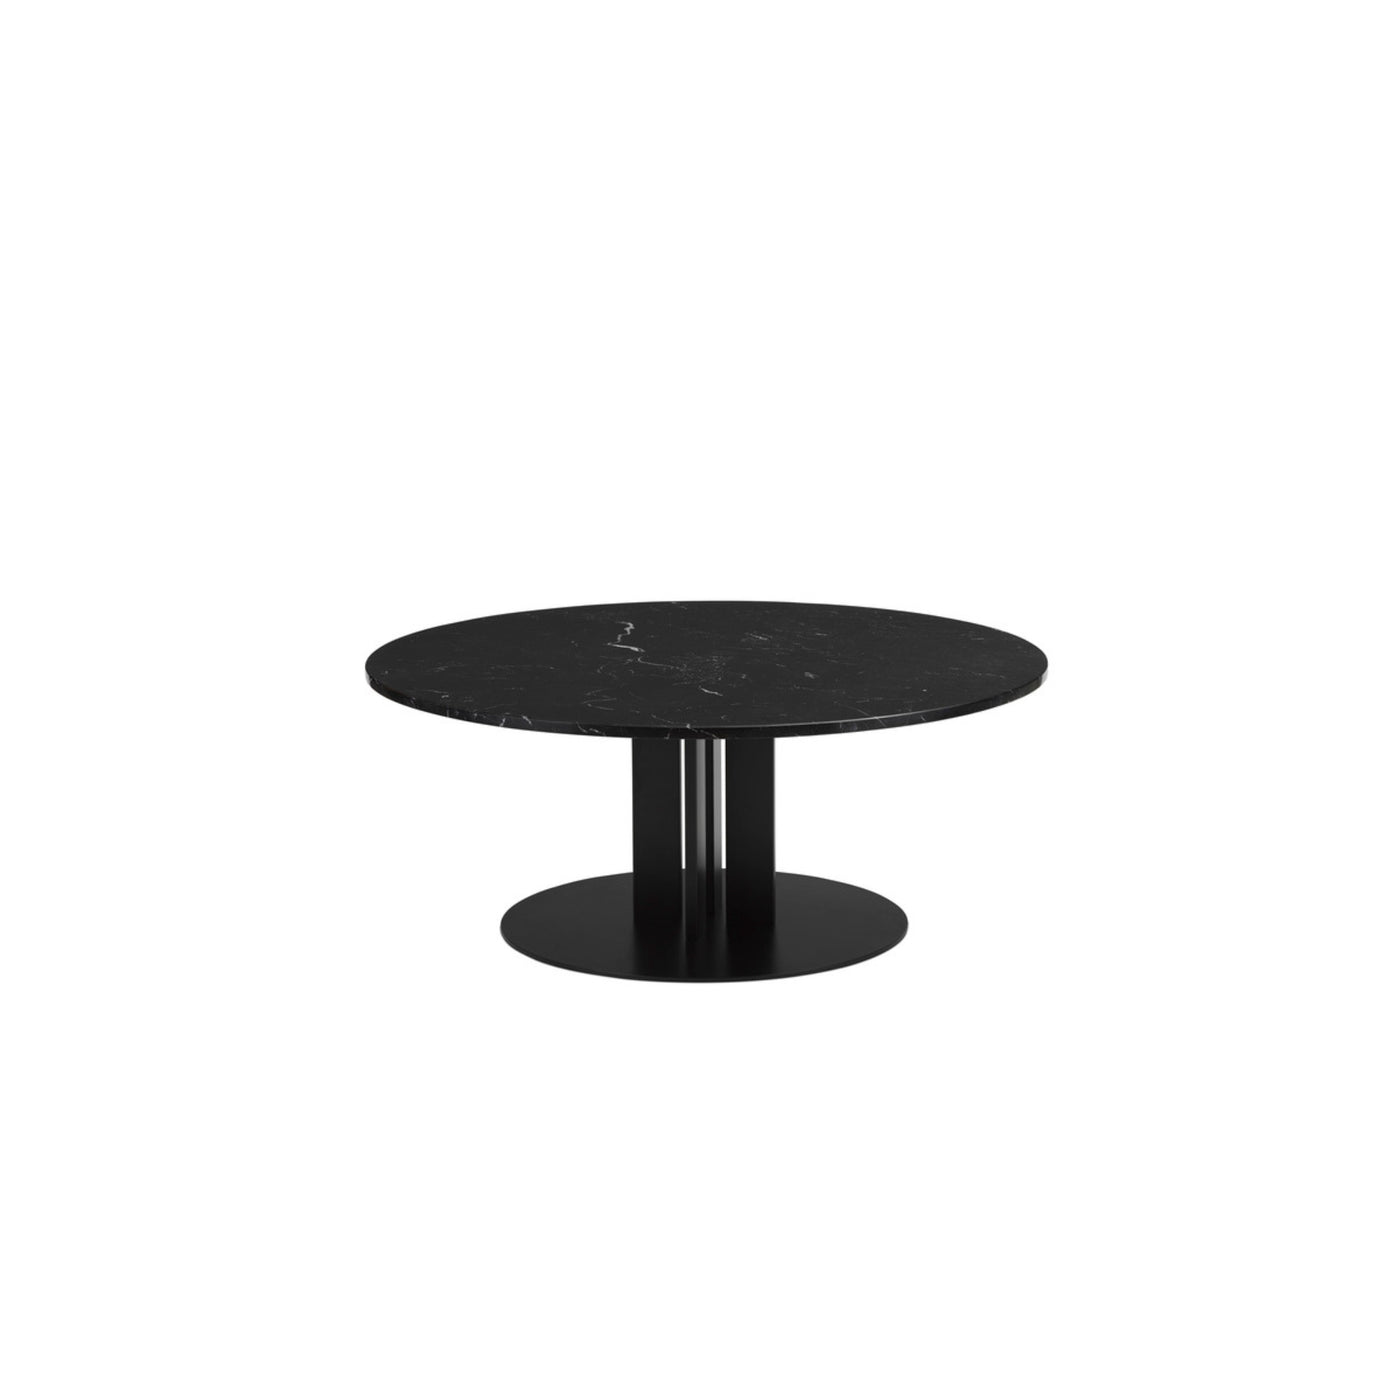 Normann Copenhagen Scala Coffee Table at someday designs. #colour_black-marble